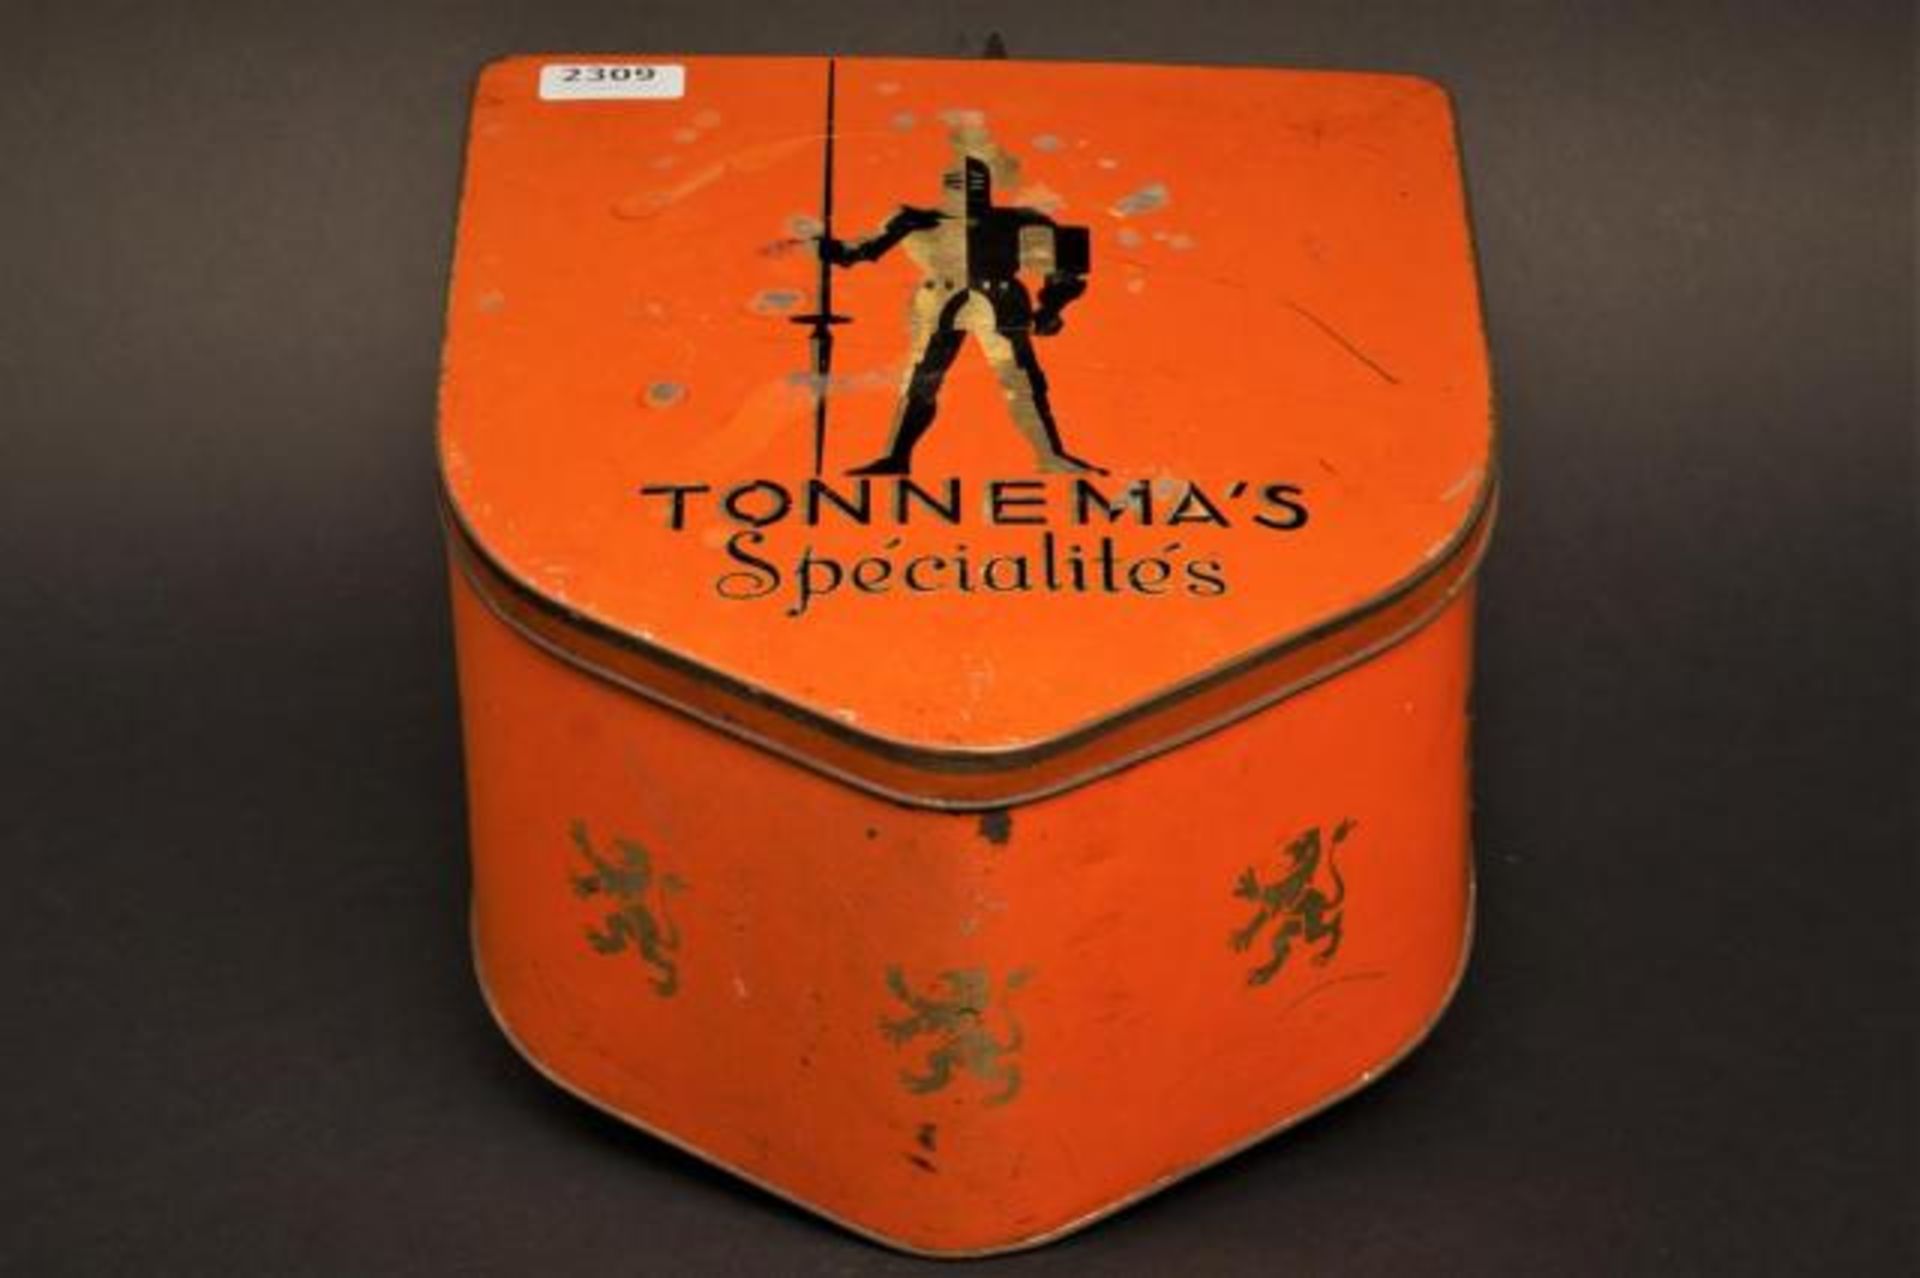 Tonneman's biscuit box, wear and tear, h. 25 cm.